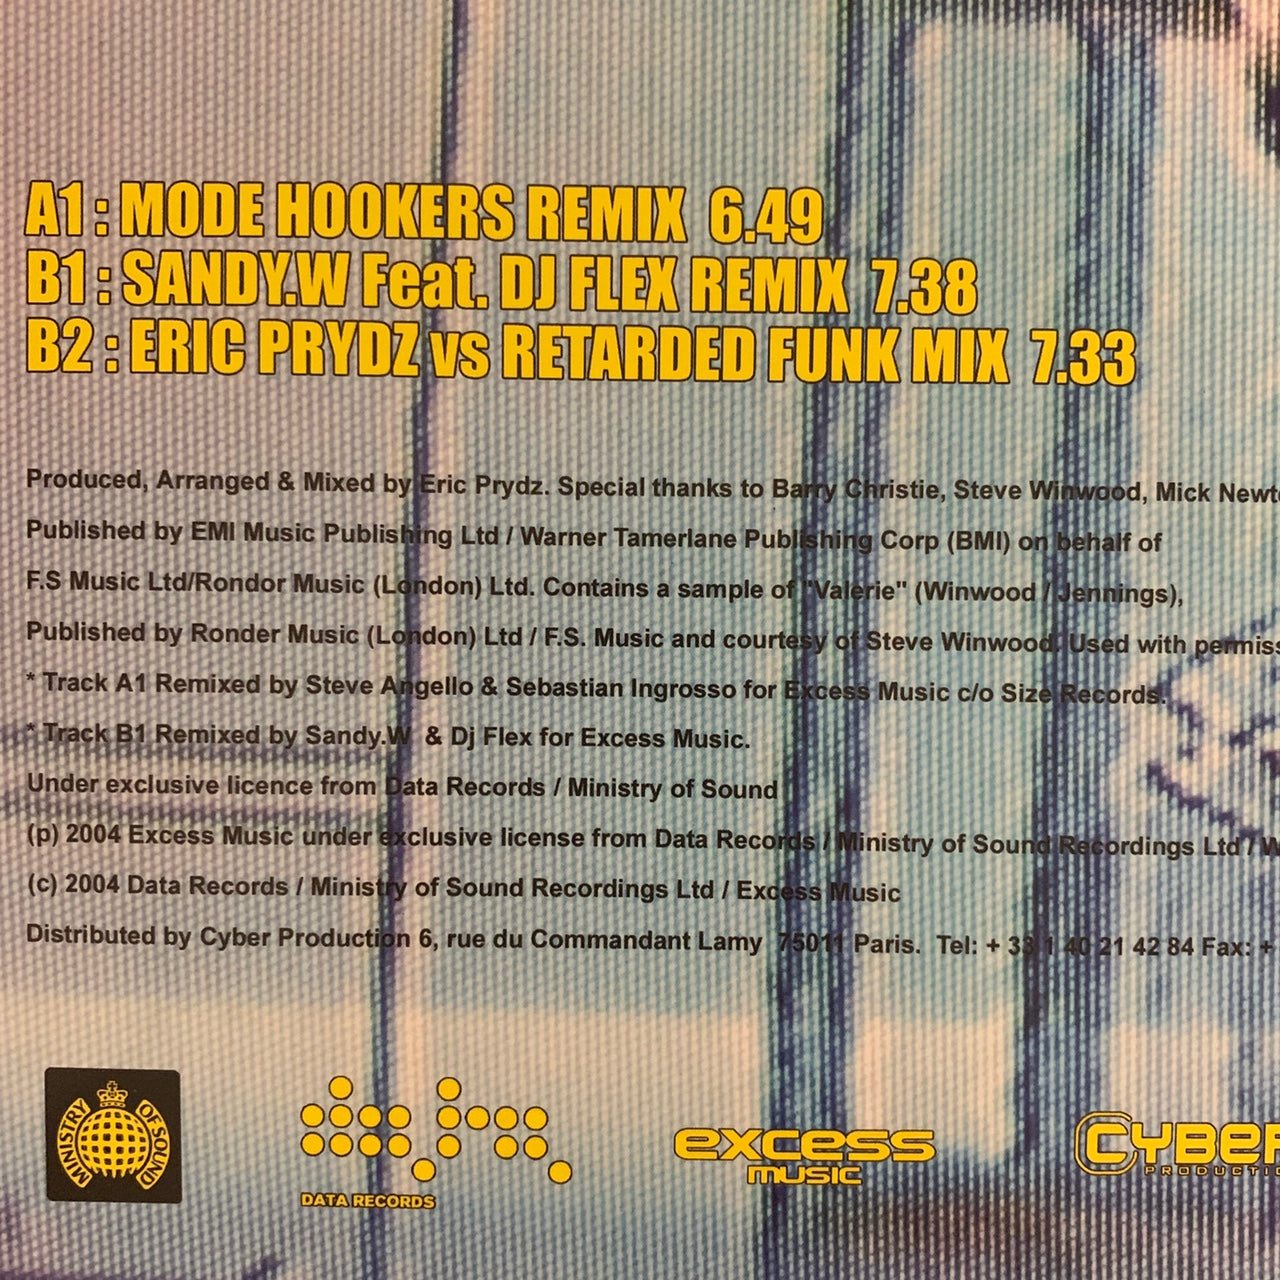 Eric Prydz “Call On Me” 3 Version 12inch Vinyl